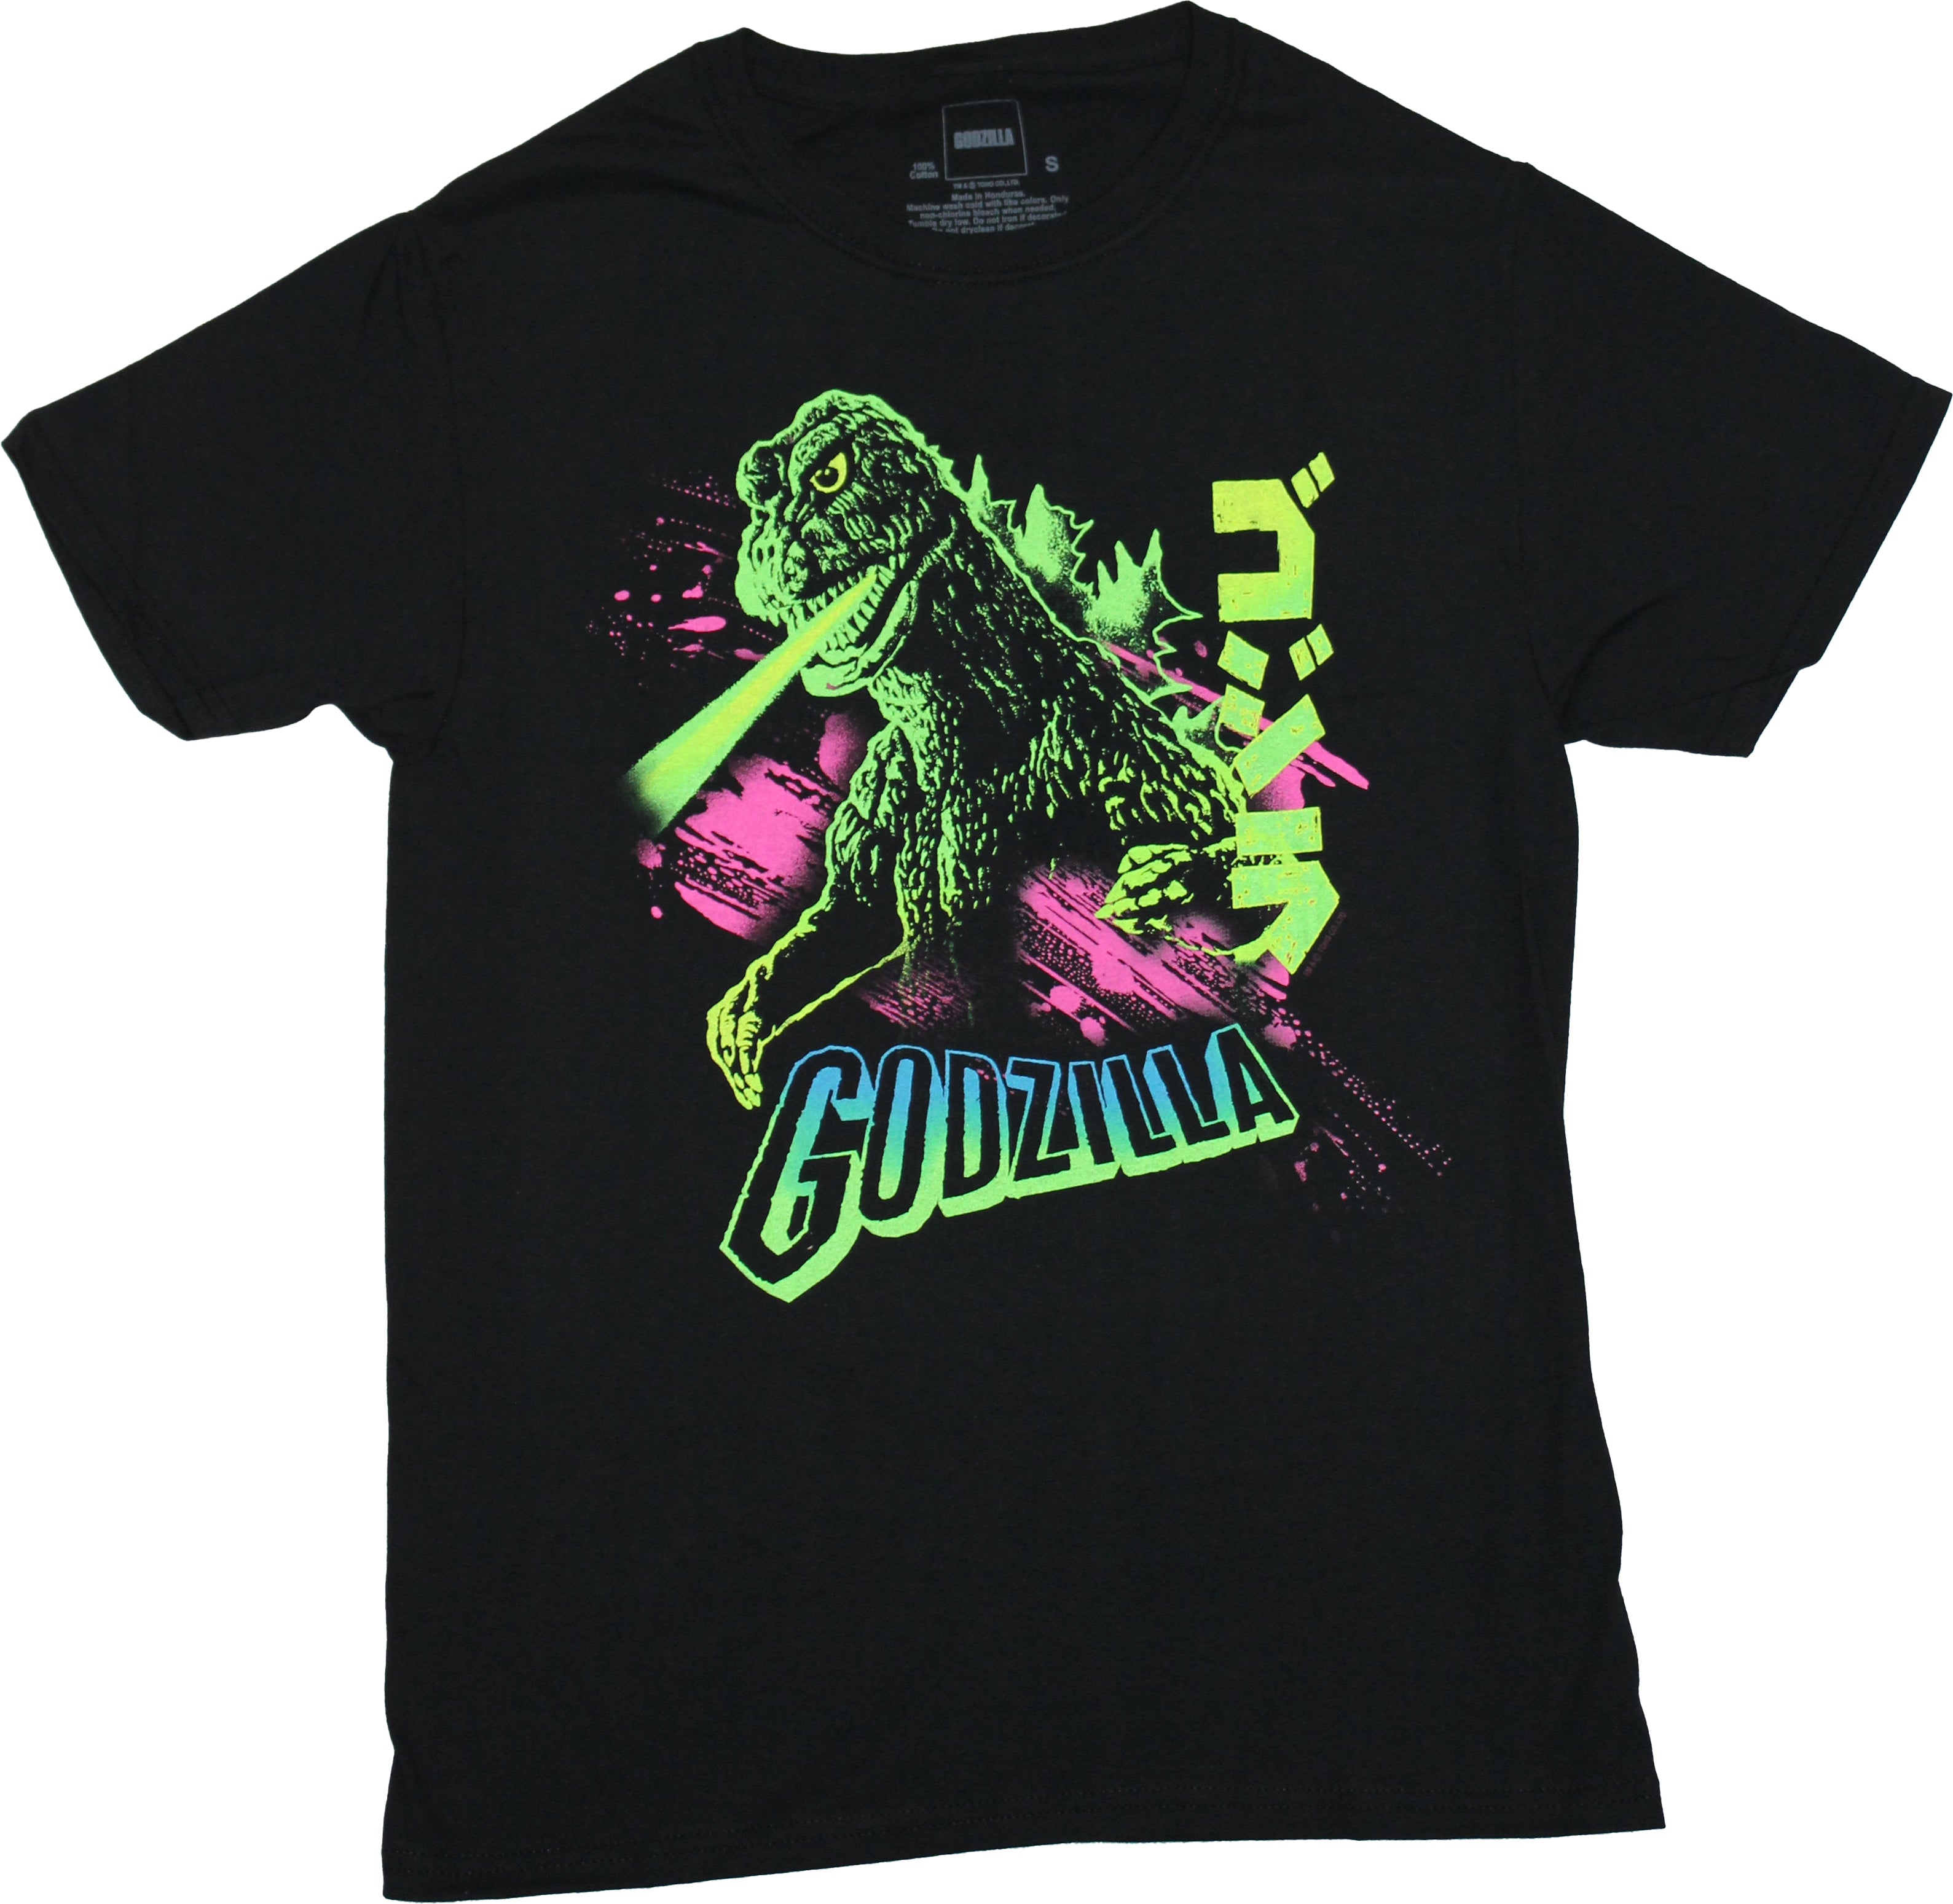 Godzilla Mens T-Shirt - Bright Neon Over Name With Kanji